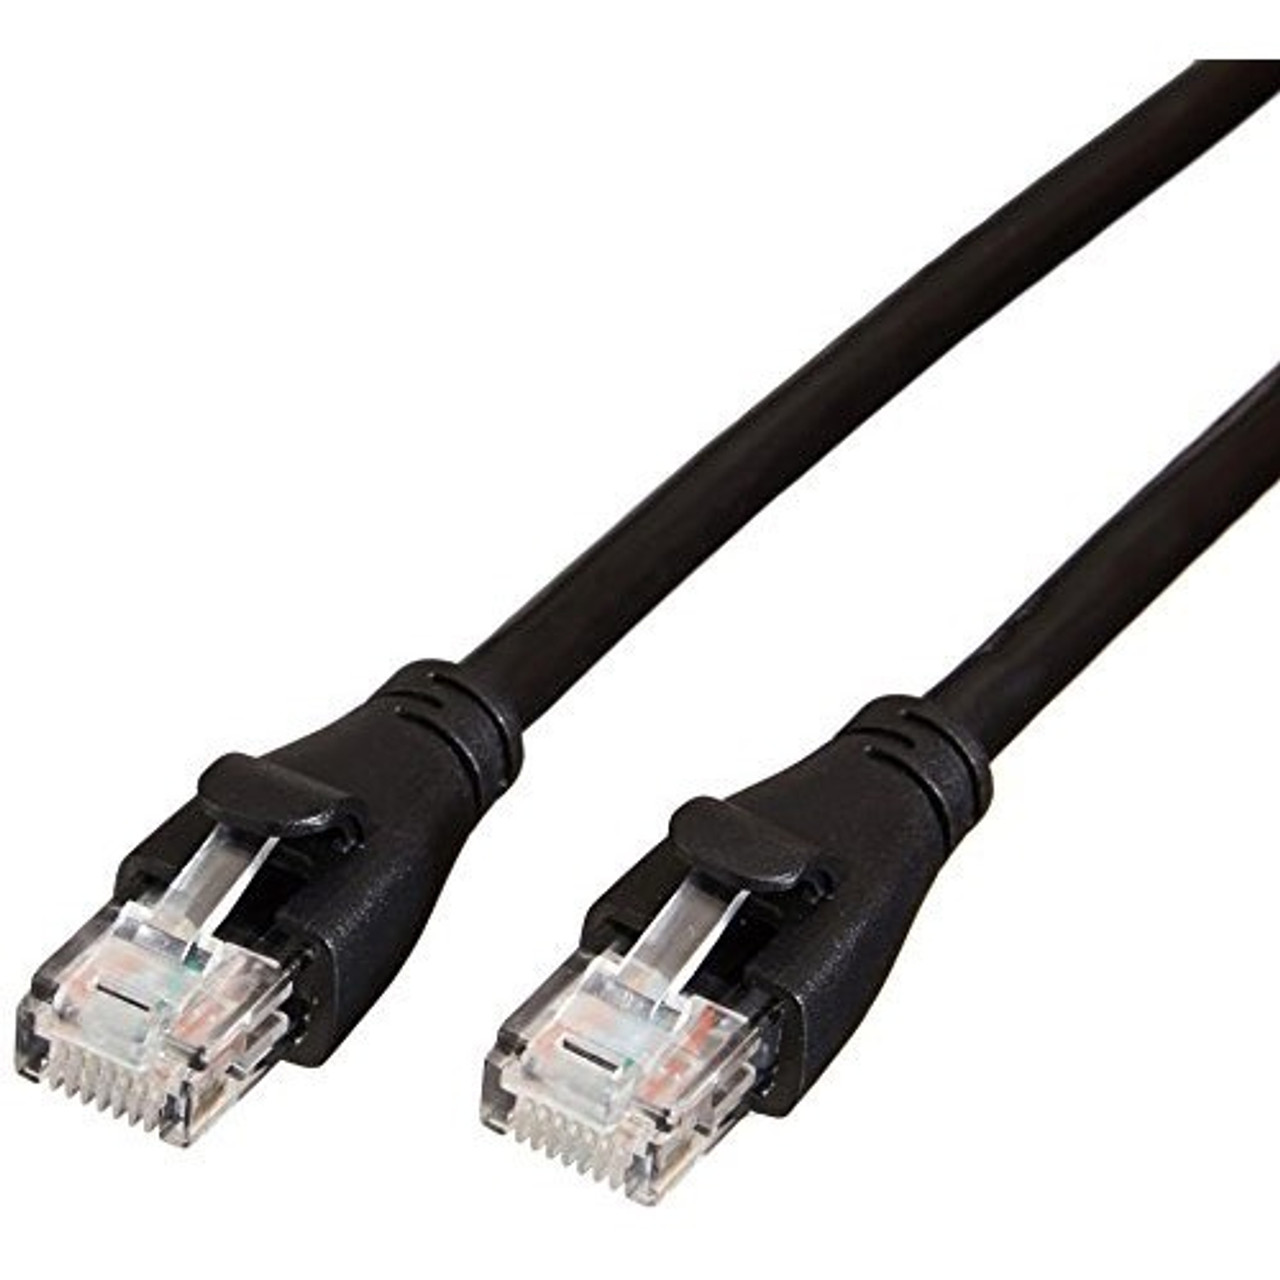 Cable - 2457-85517-001 Polycom Studio USB 2.0 A to C 5m 